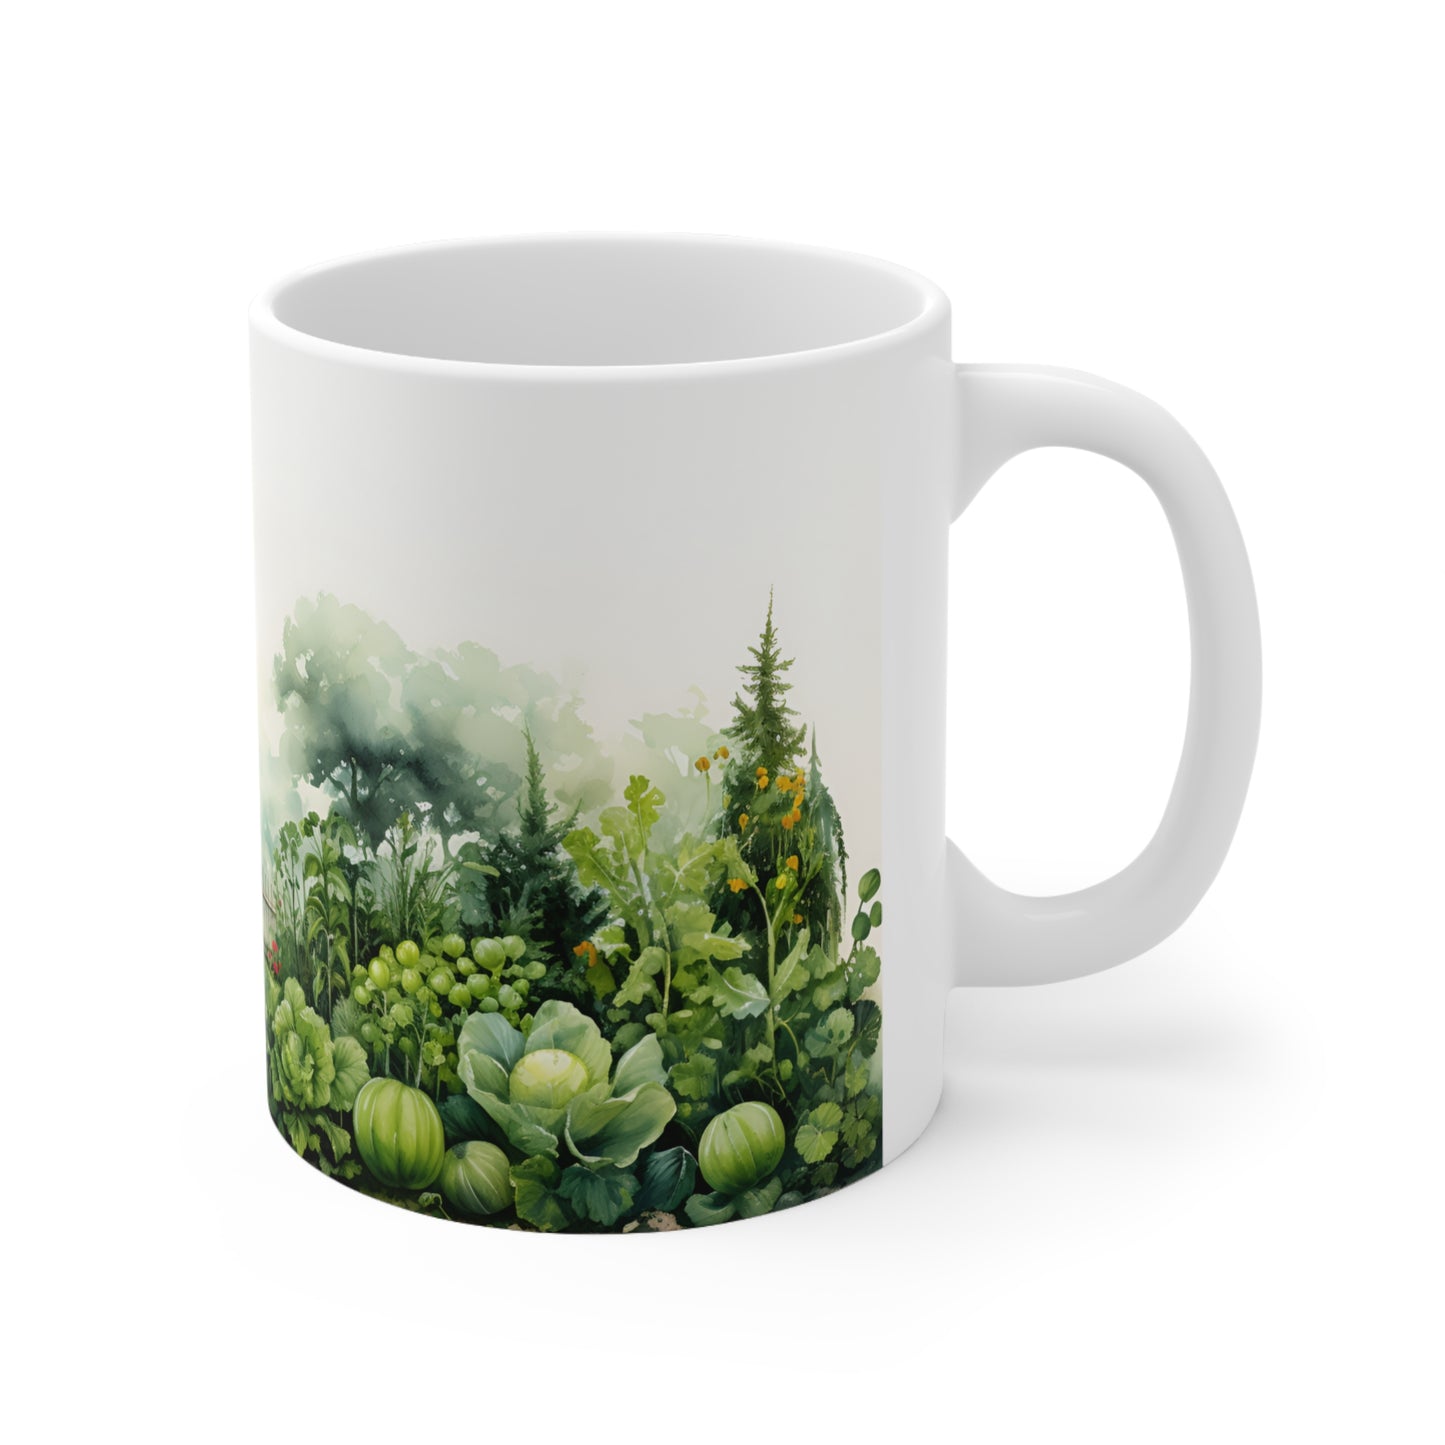 Green Garden Mug - 11pz Ceramic Mug